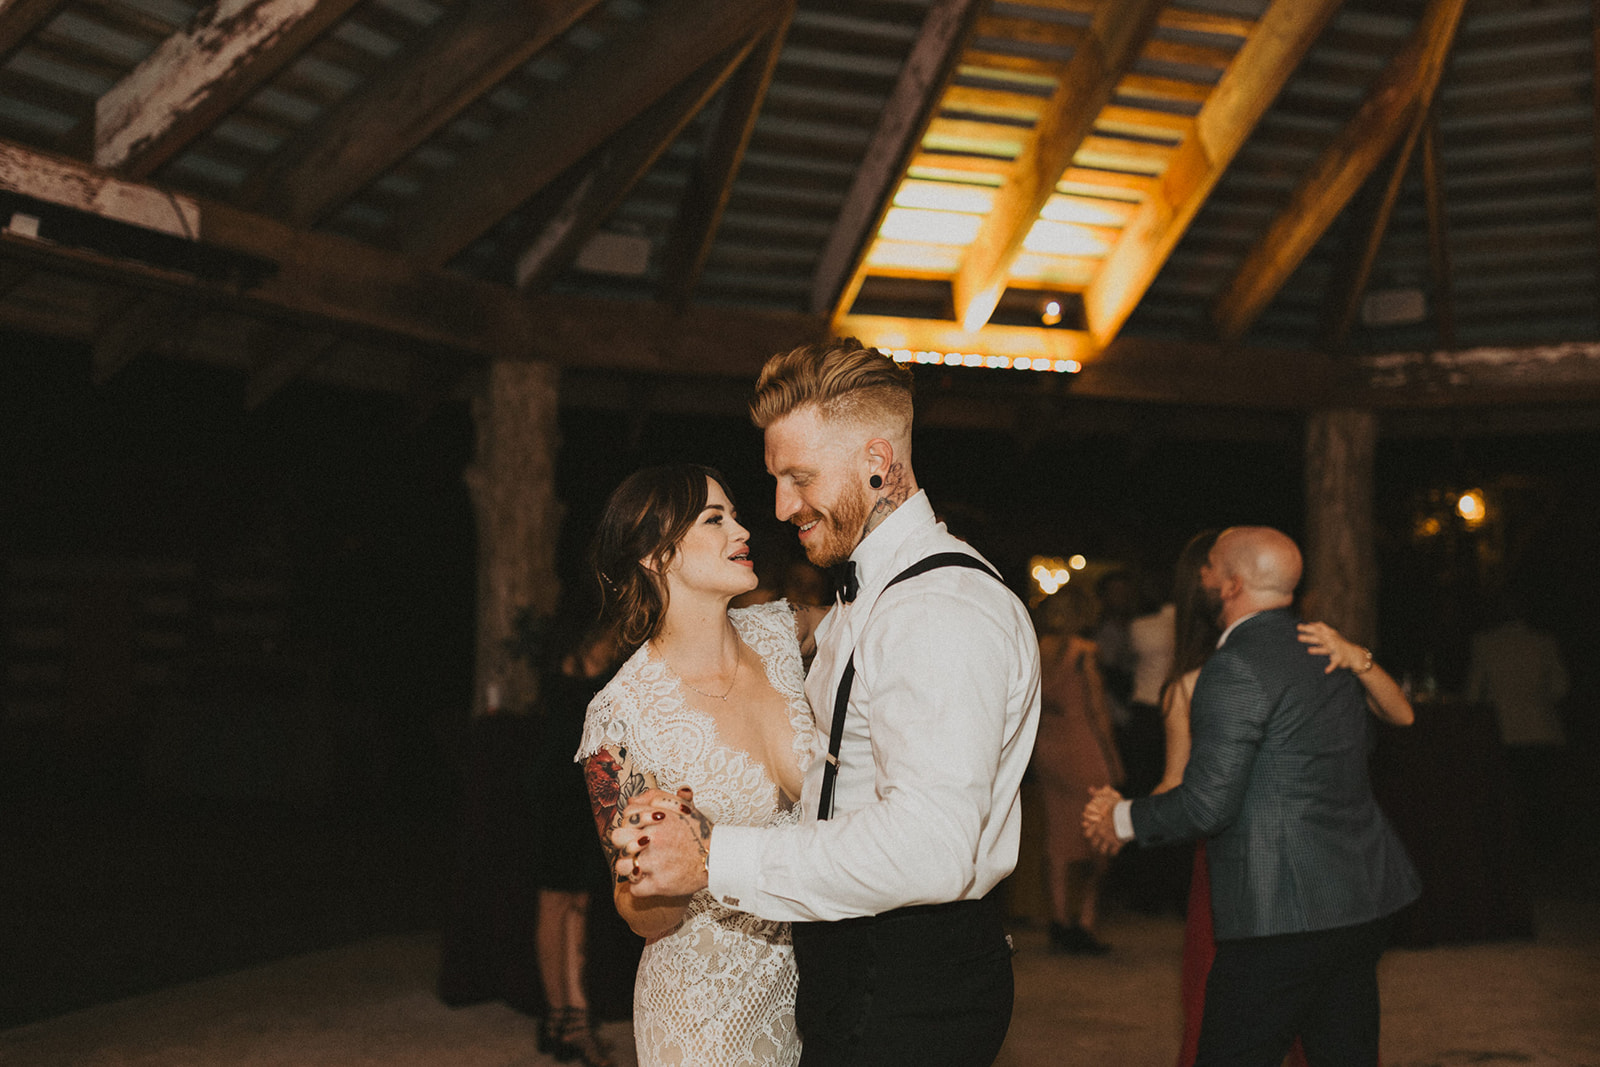 couple dances at outdoor wedding reception